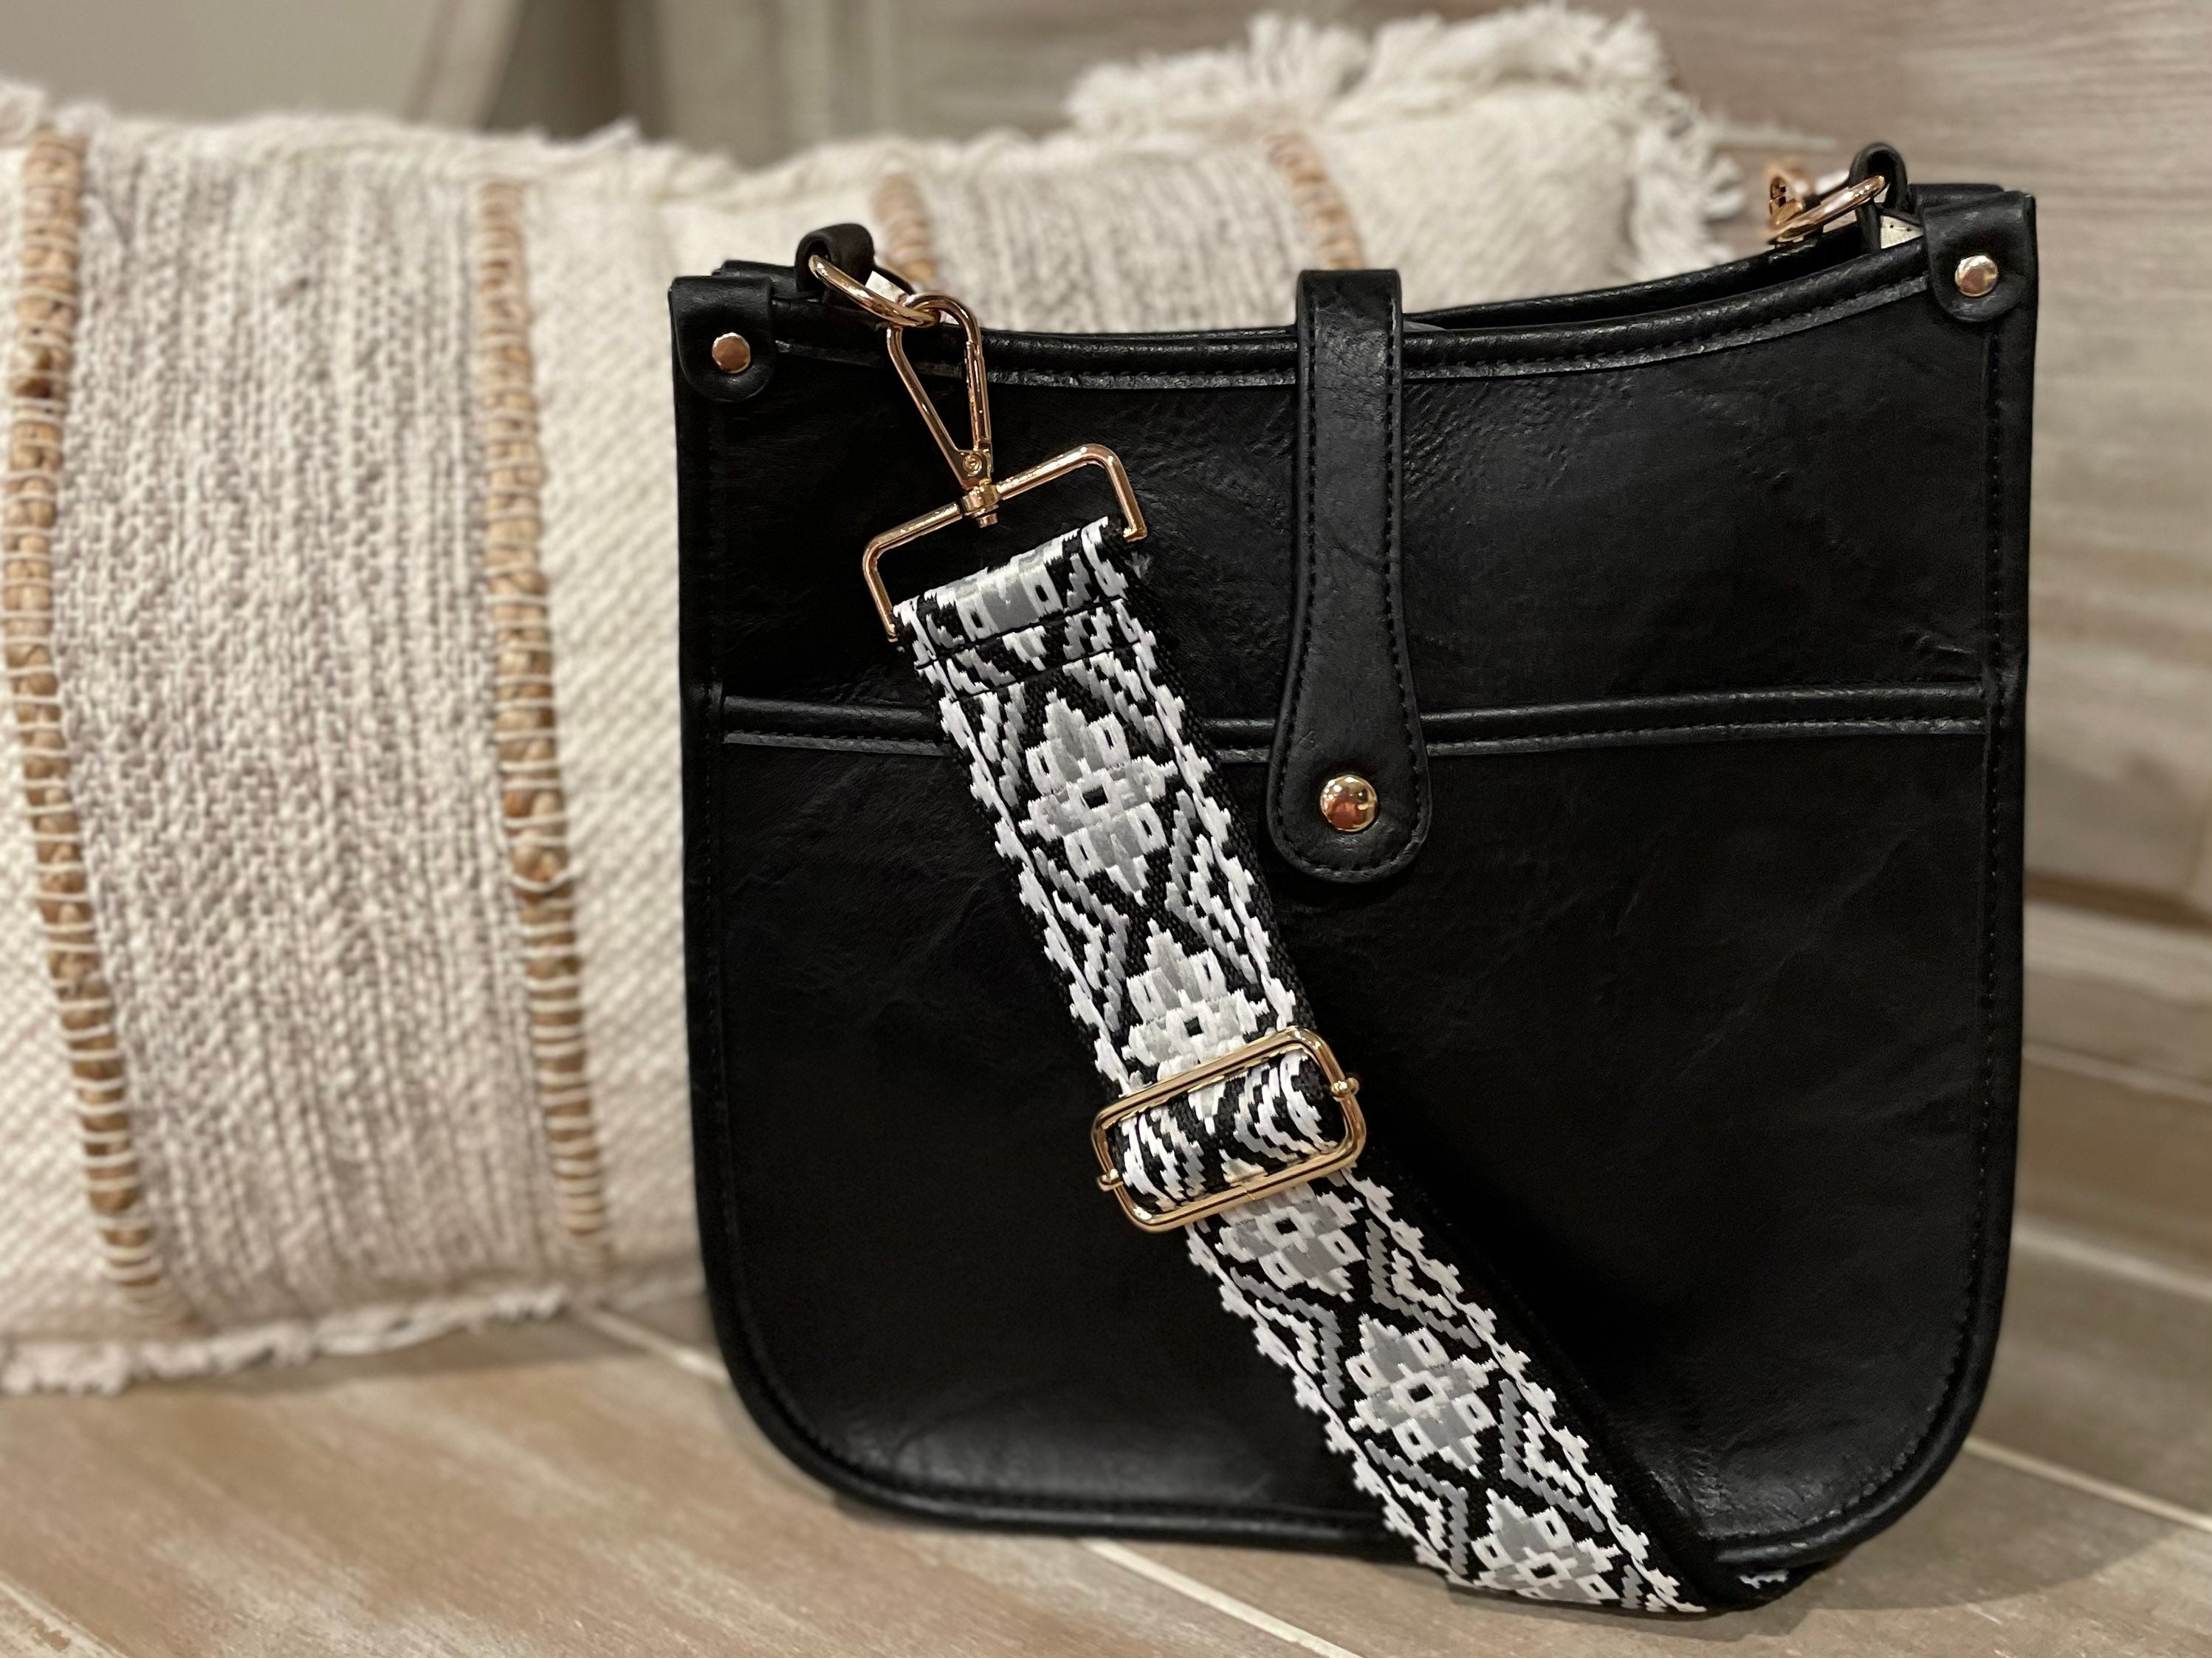 TREND ALERT: Guitar Bag Strap for less & update any handbag in